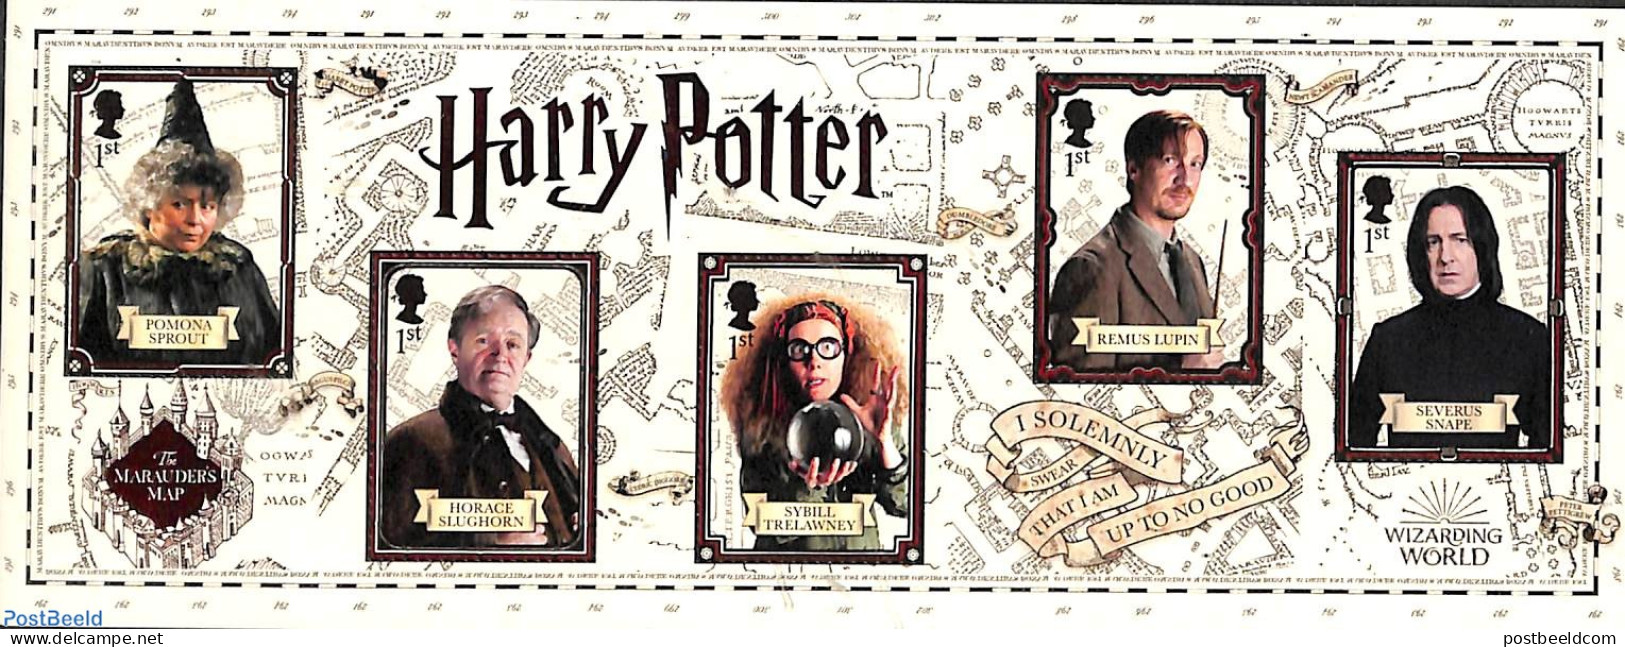 Great Britain 2018 Harry Potter 5v M/s S-a, Mint NH, Art - Children's Books Illustrations - Harry Potter - Neufs